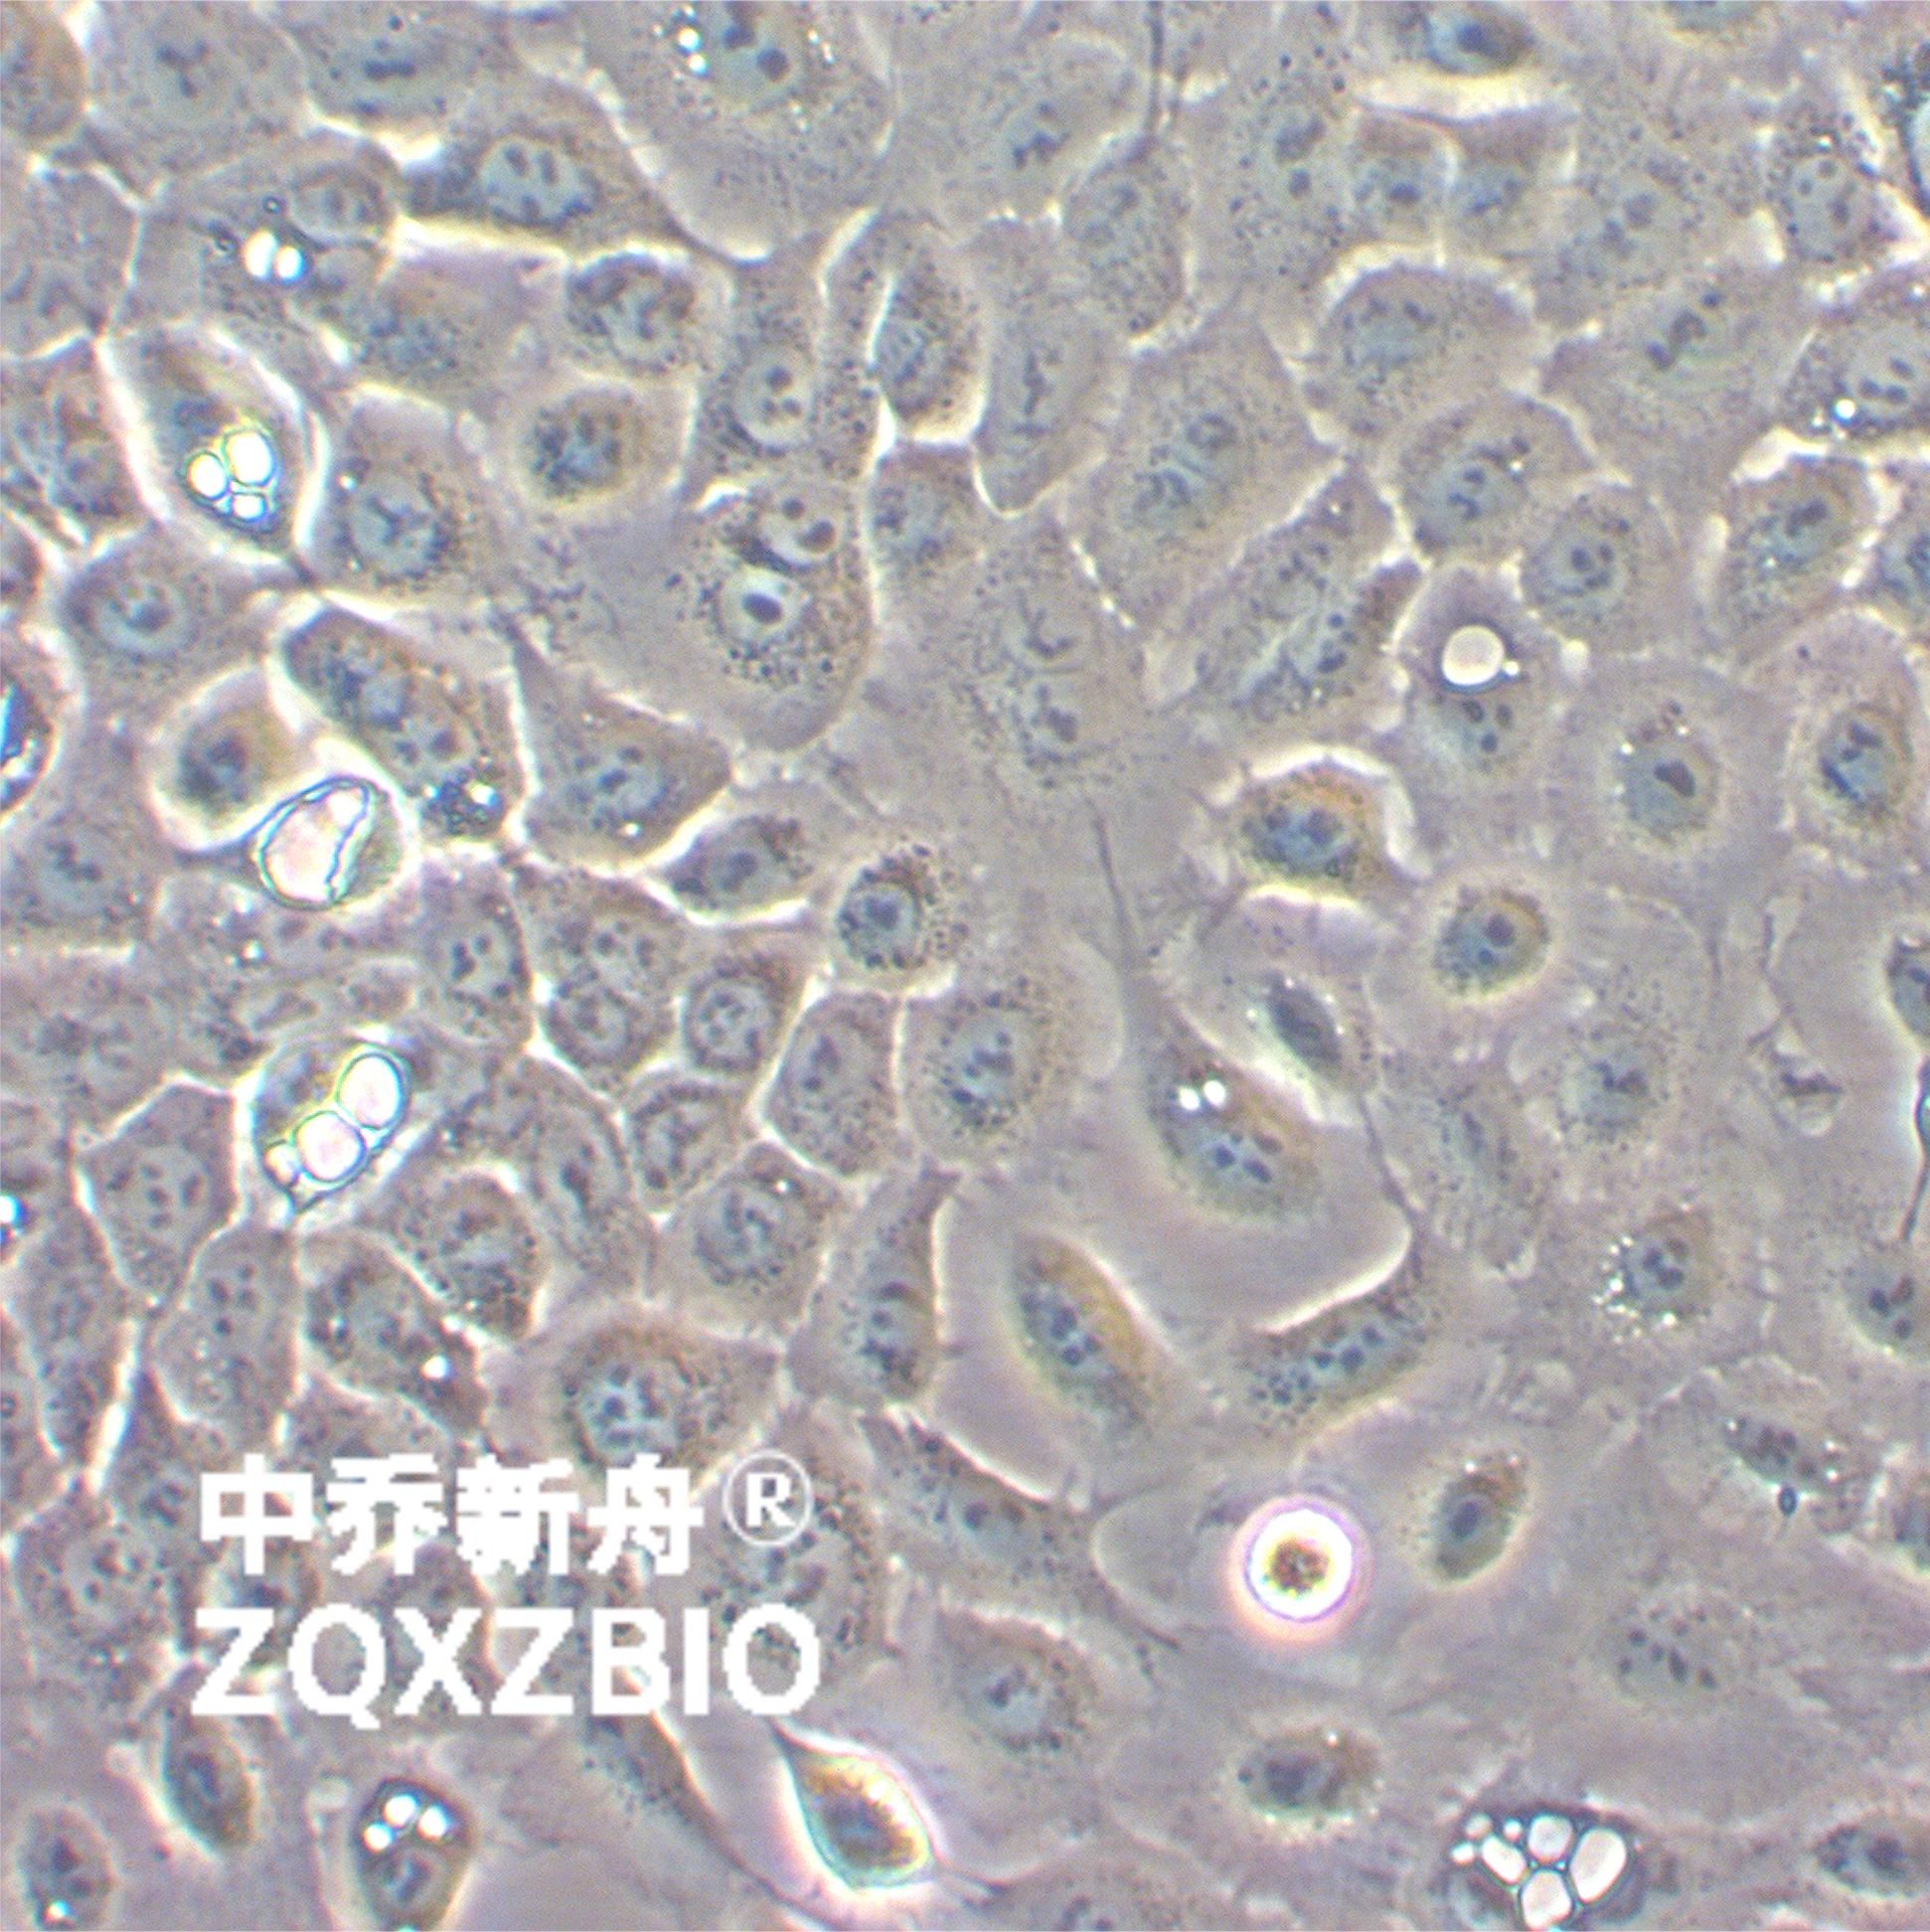 NCI-H292人肺癌细胞(淋巴结转移)